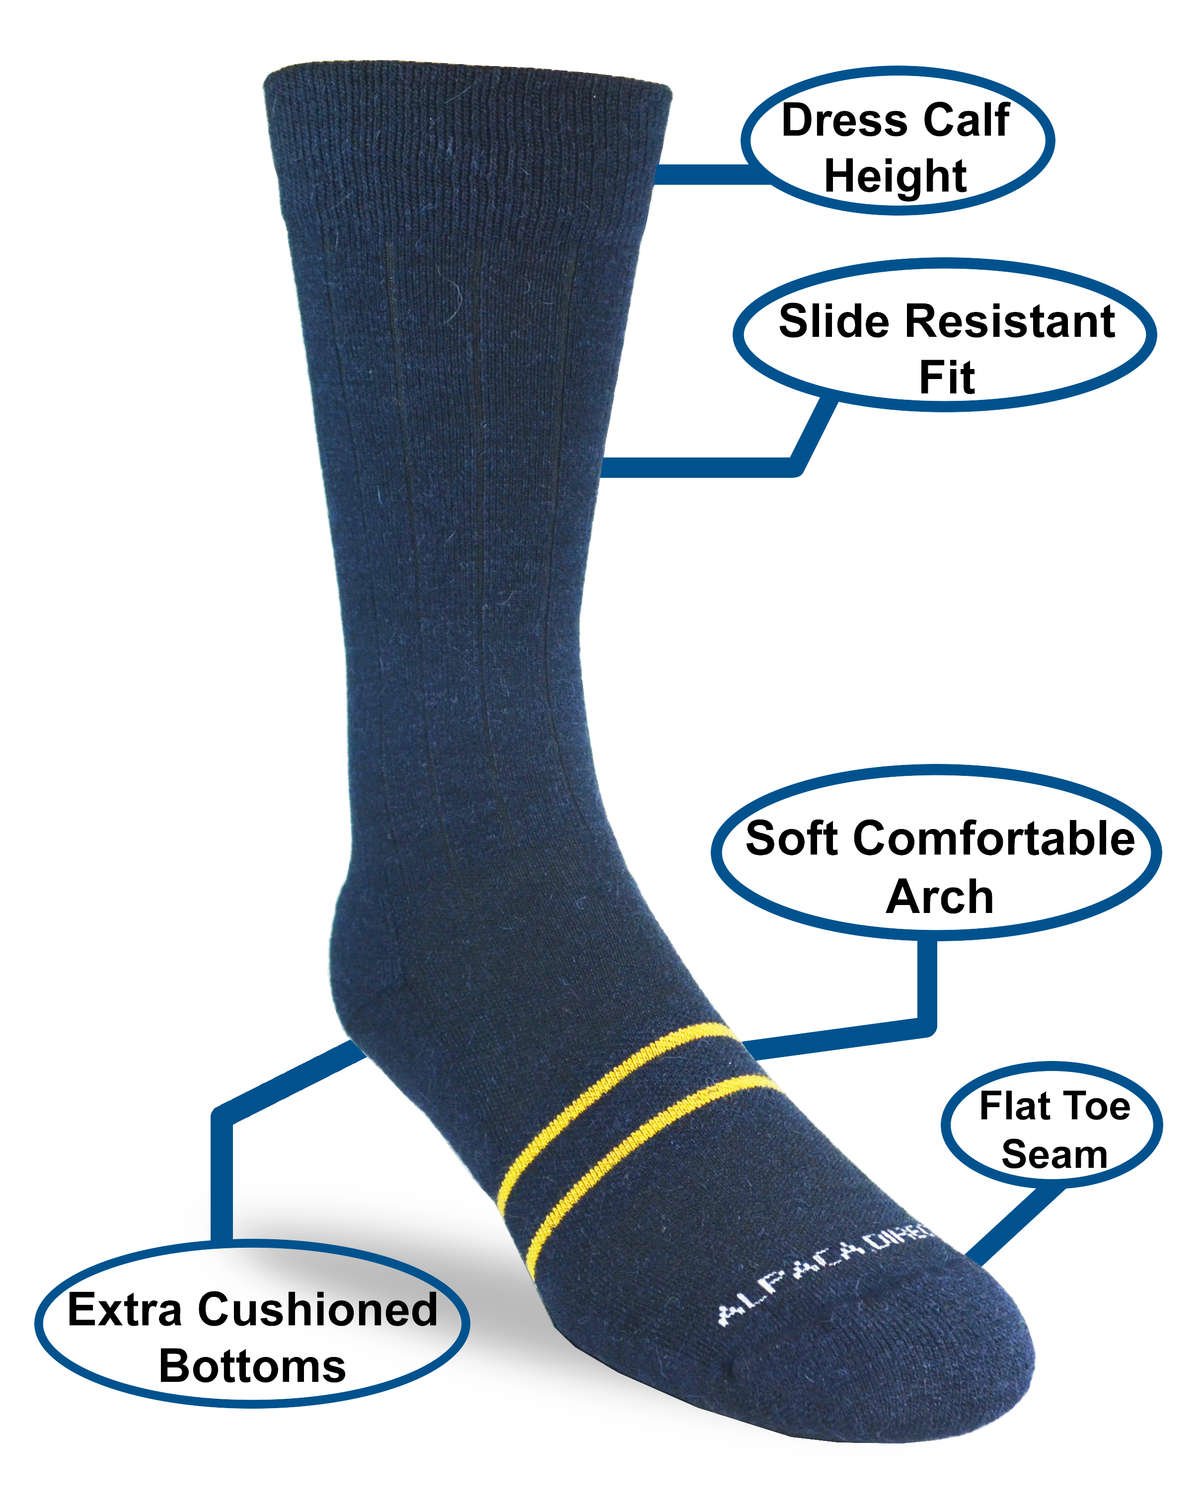 Alpaca sock features